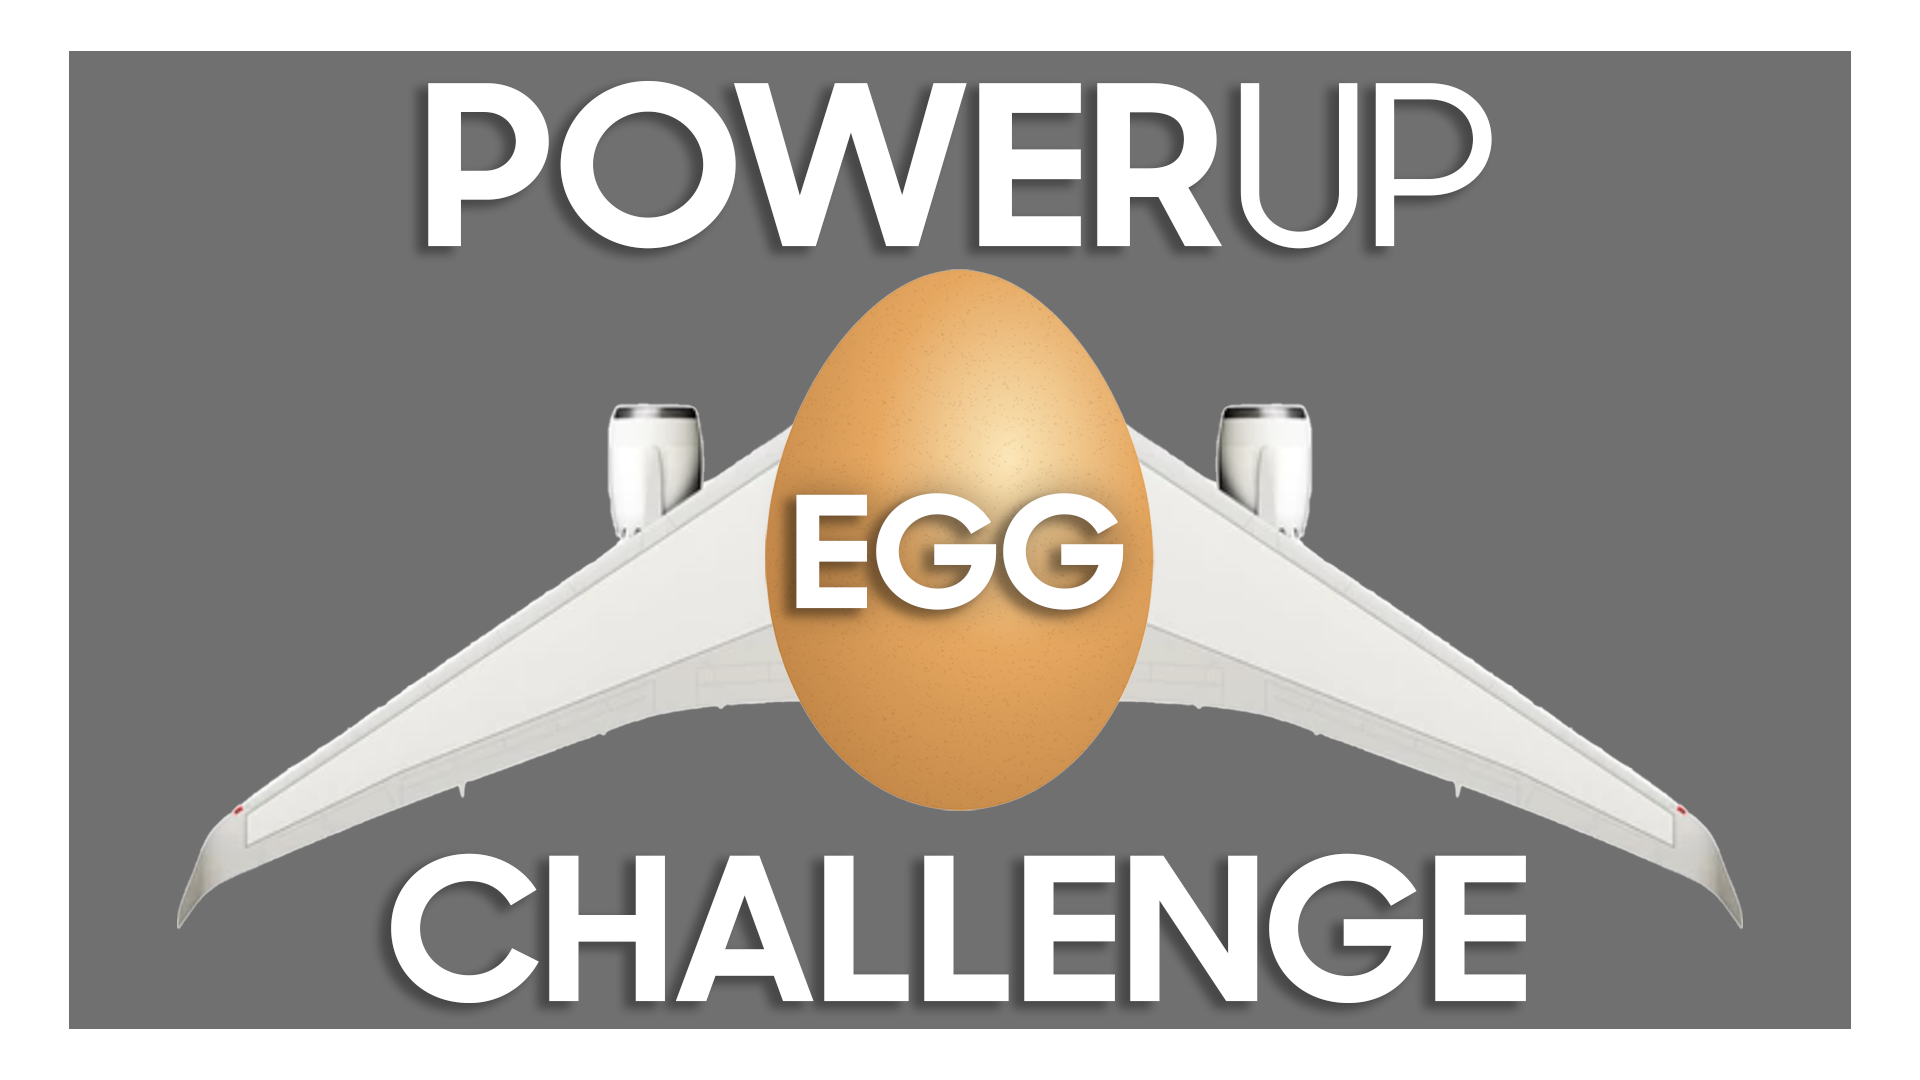 The EGG Challenge